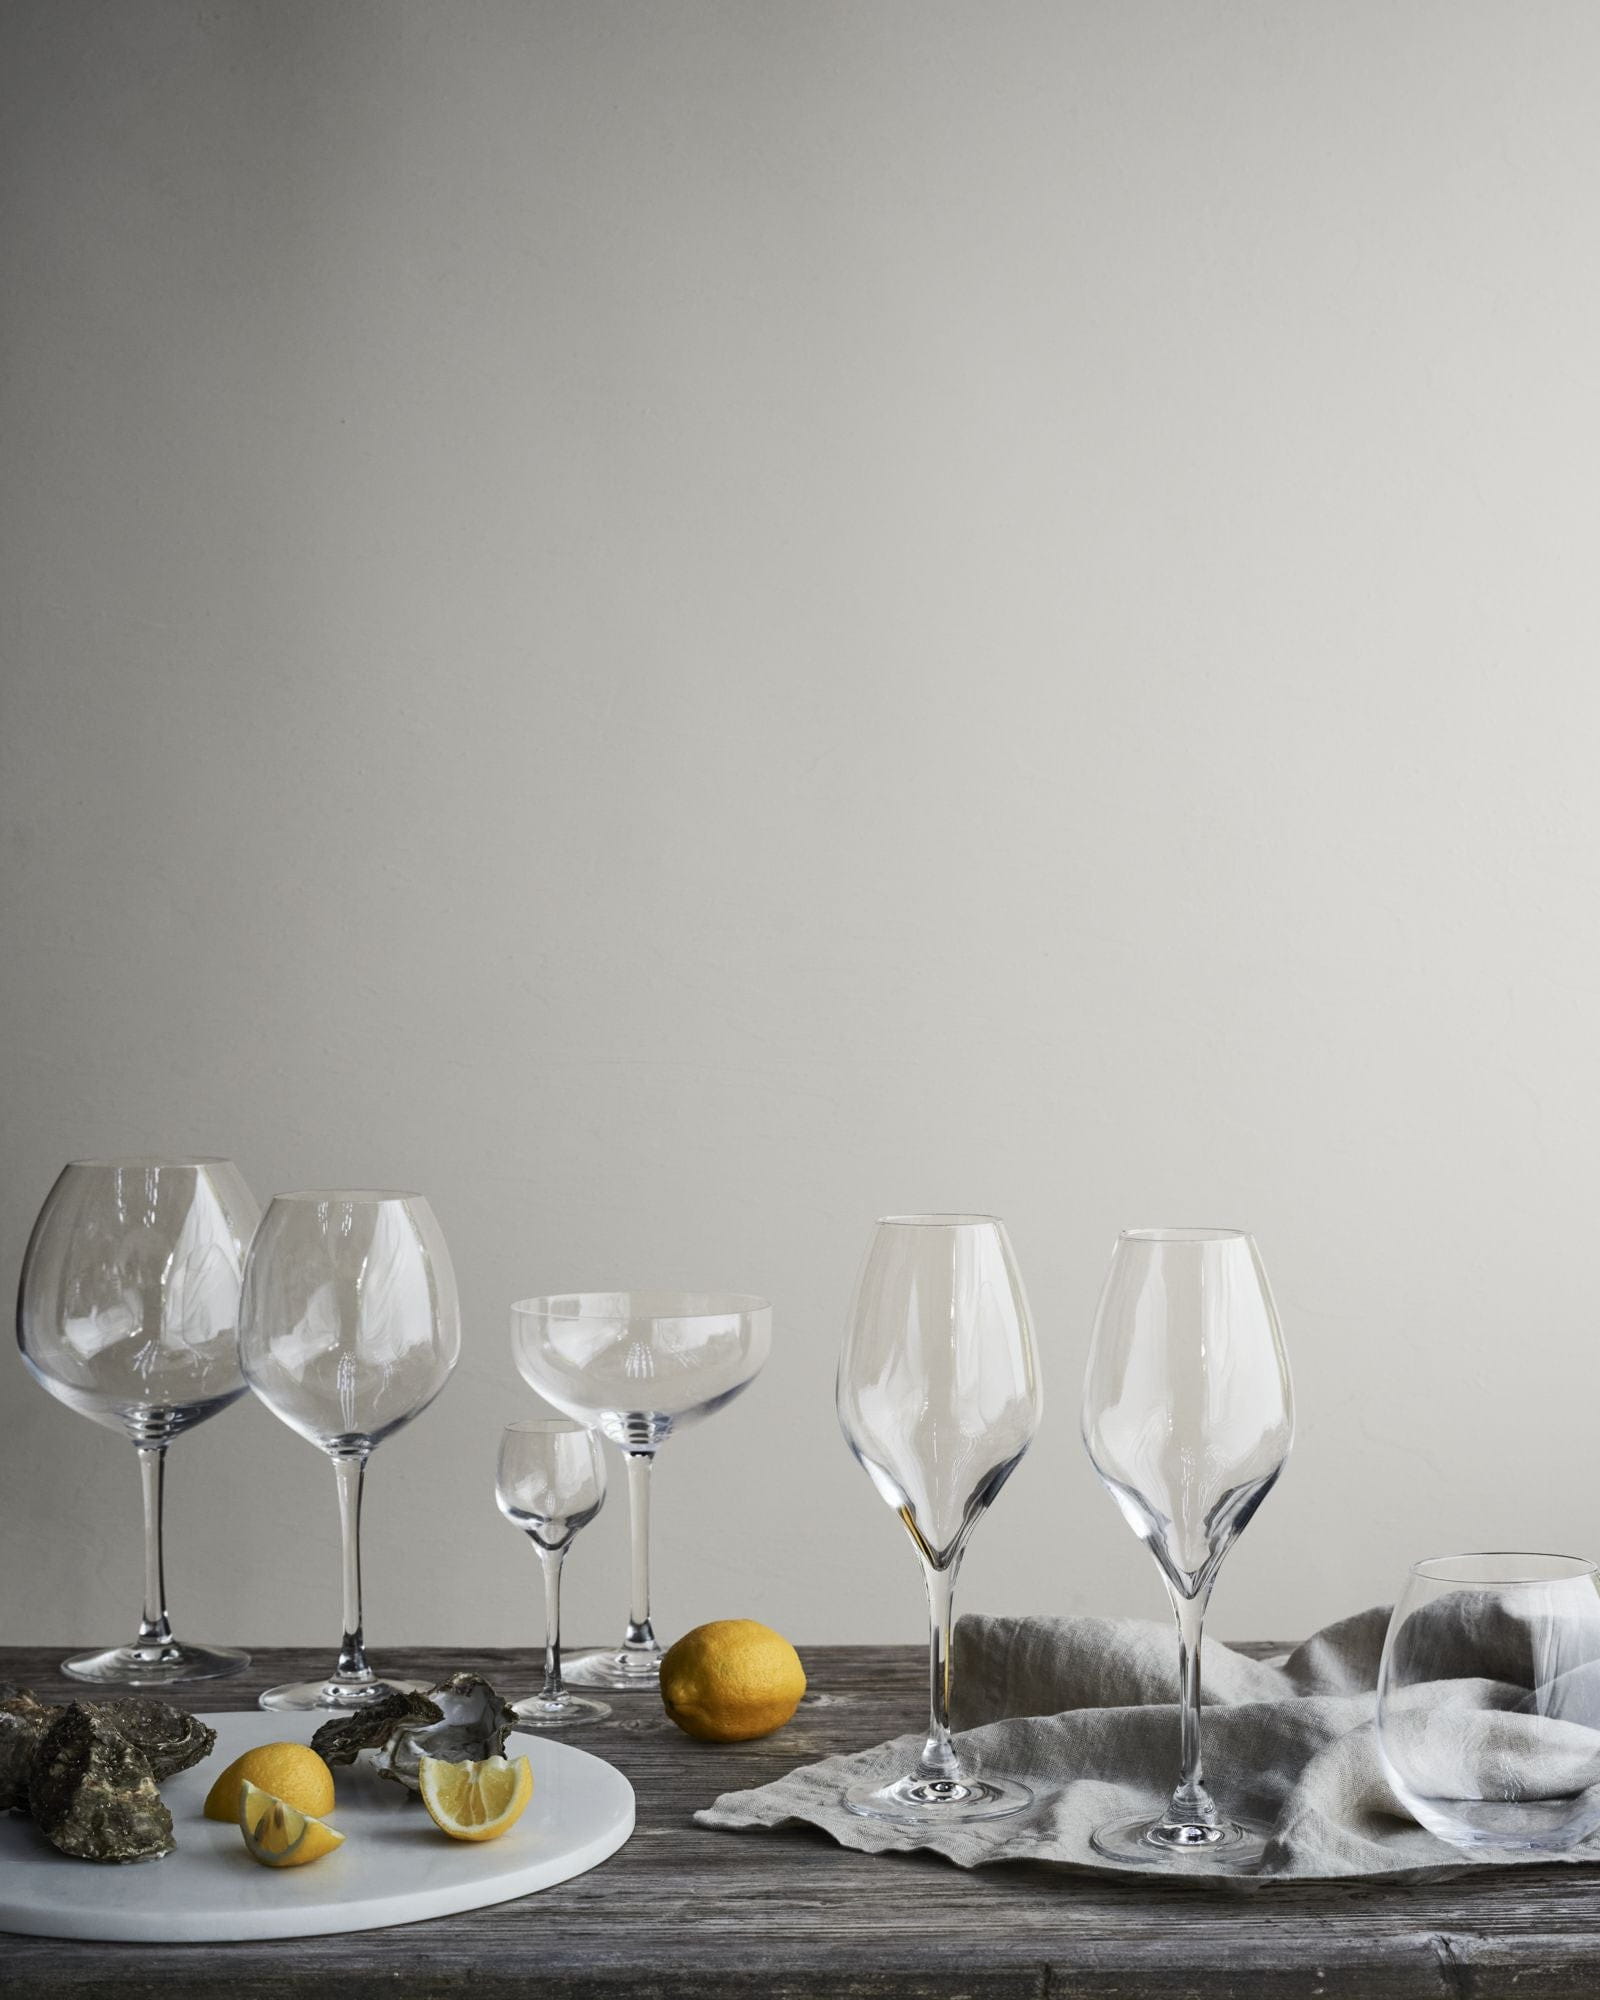 Rosendahl Premium Champagne Glass Set Of 2 370 Ml, Clear